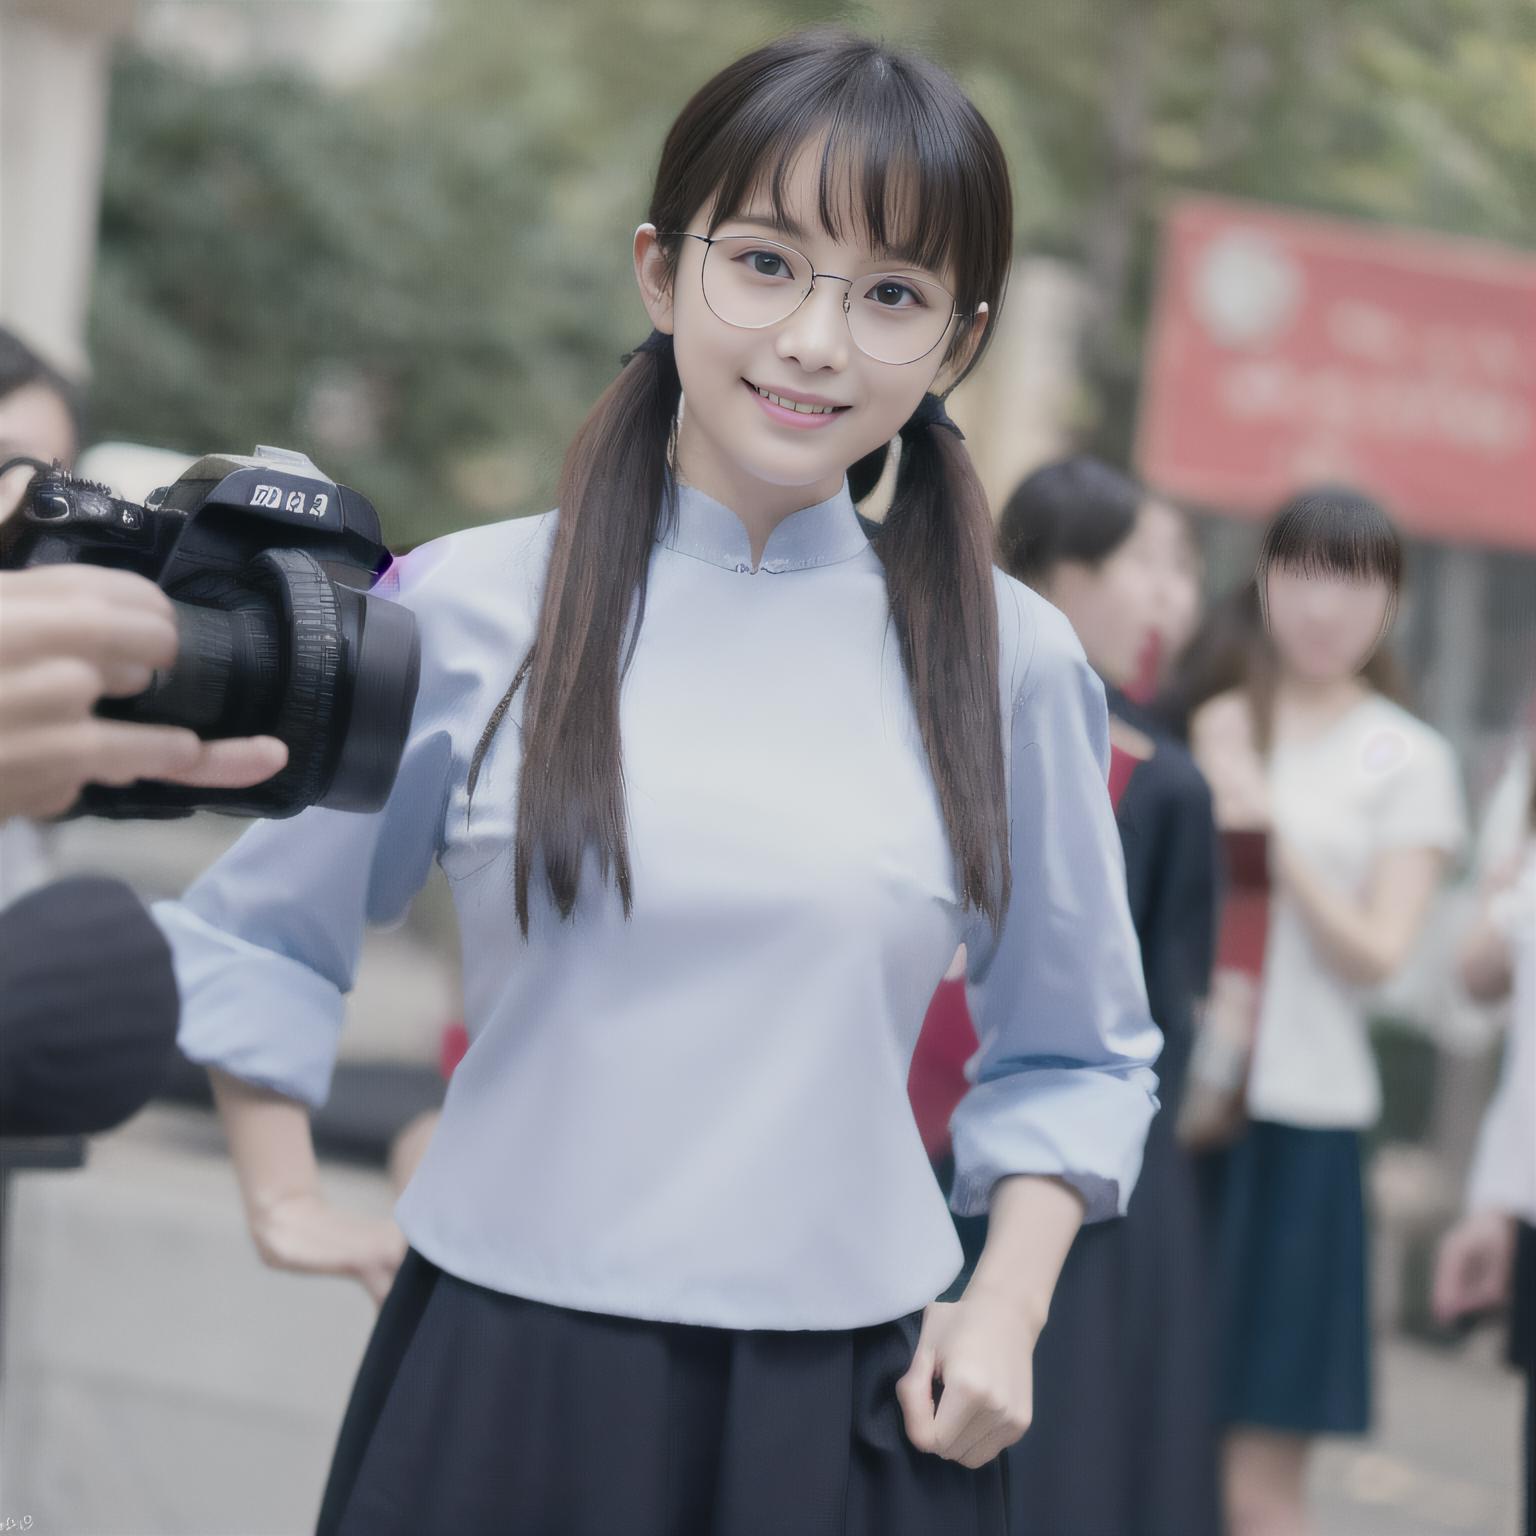 China Republican period female student uniform image by wwwcshwww